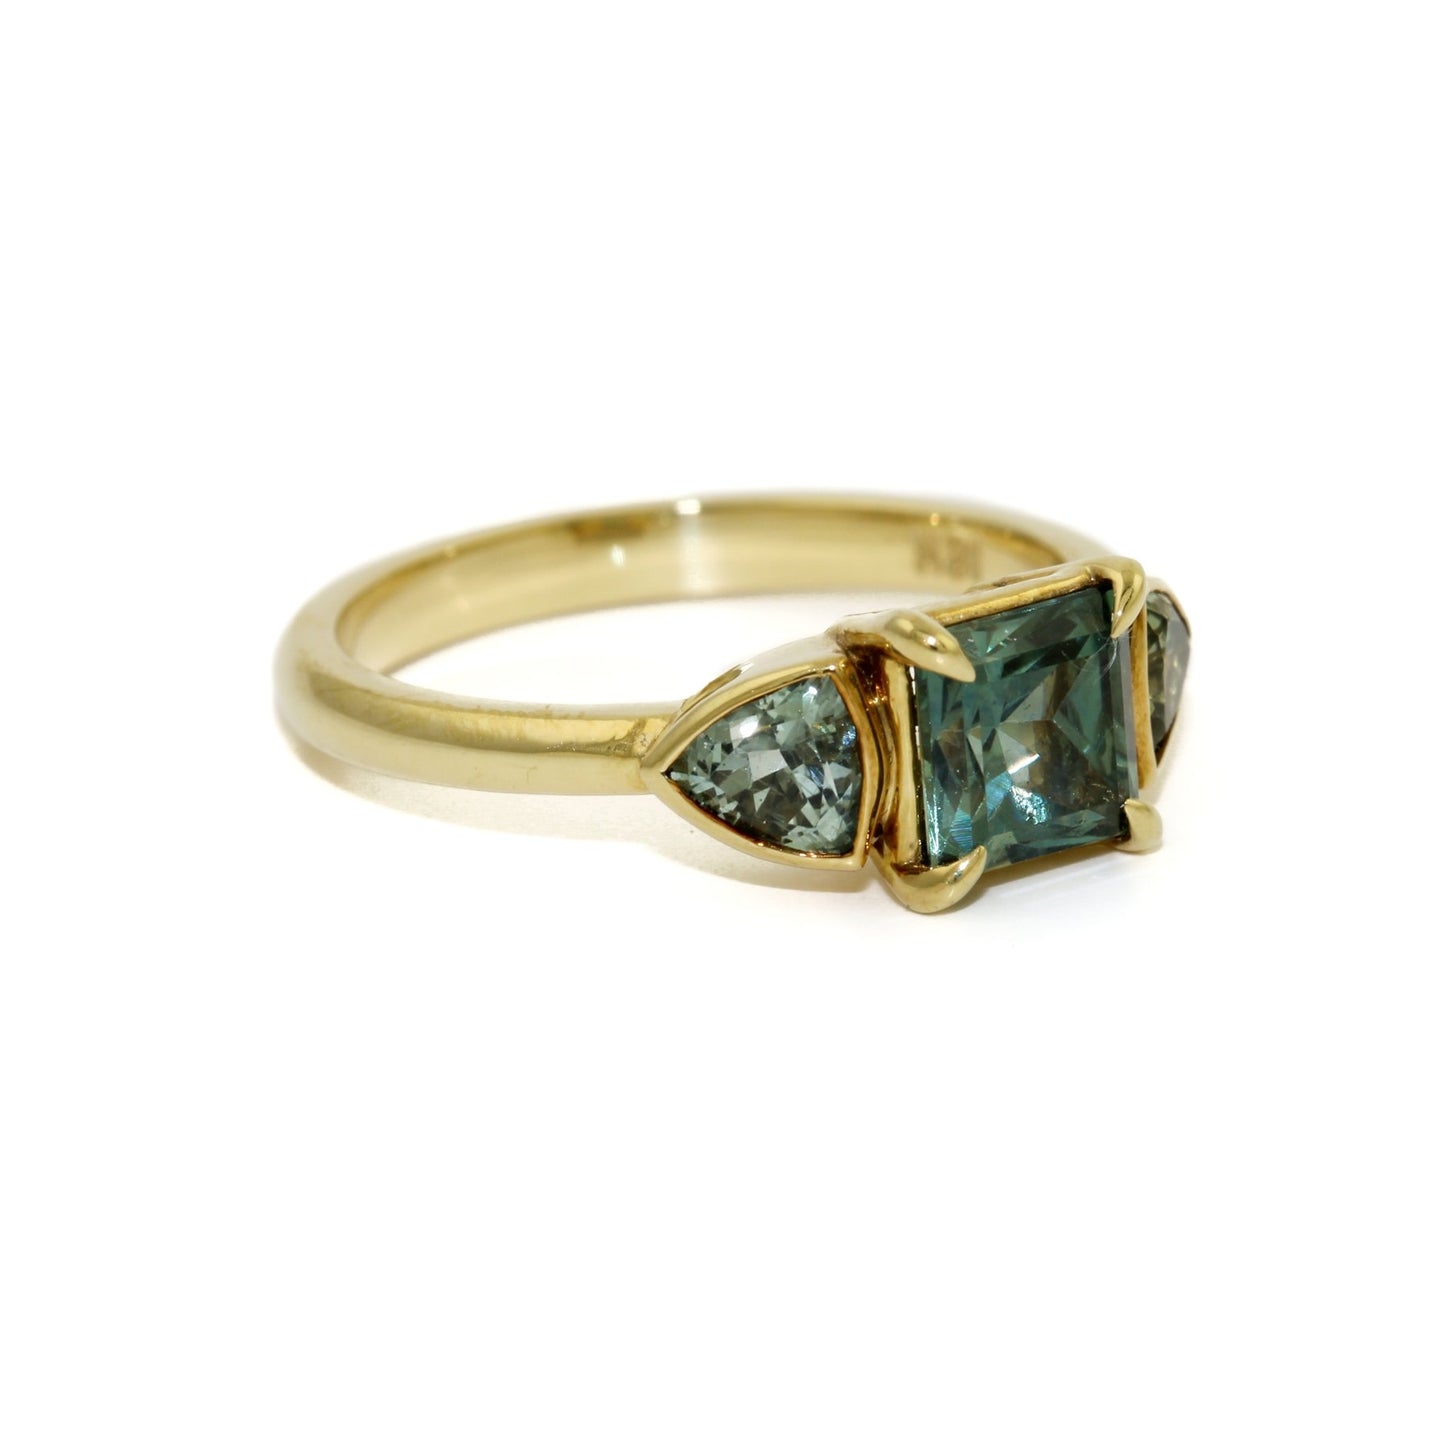 Stunning Madagascar Sapphire Ring - Kingdom Jewelry